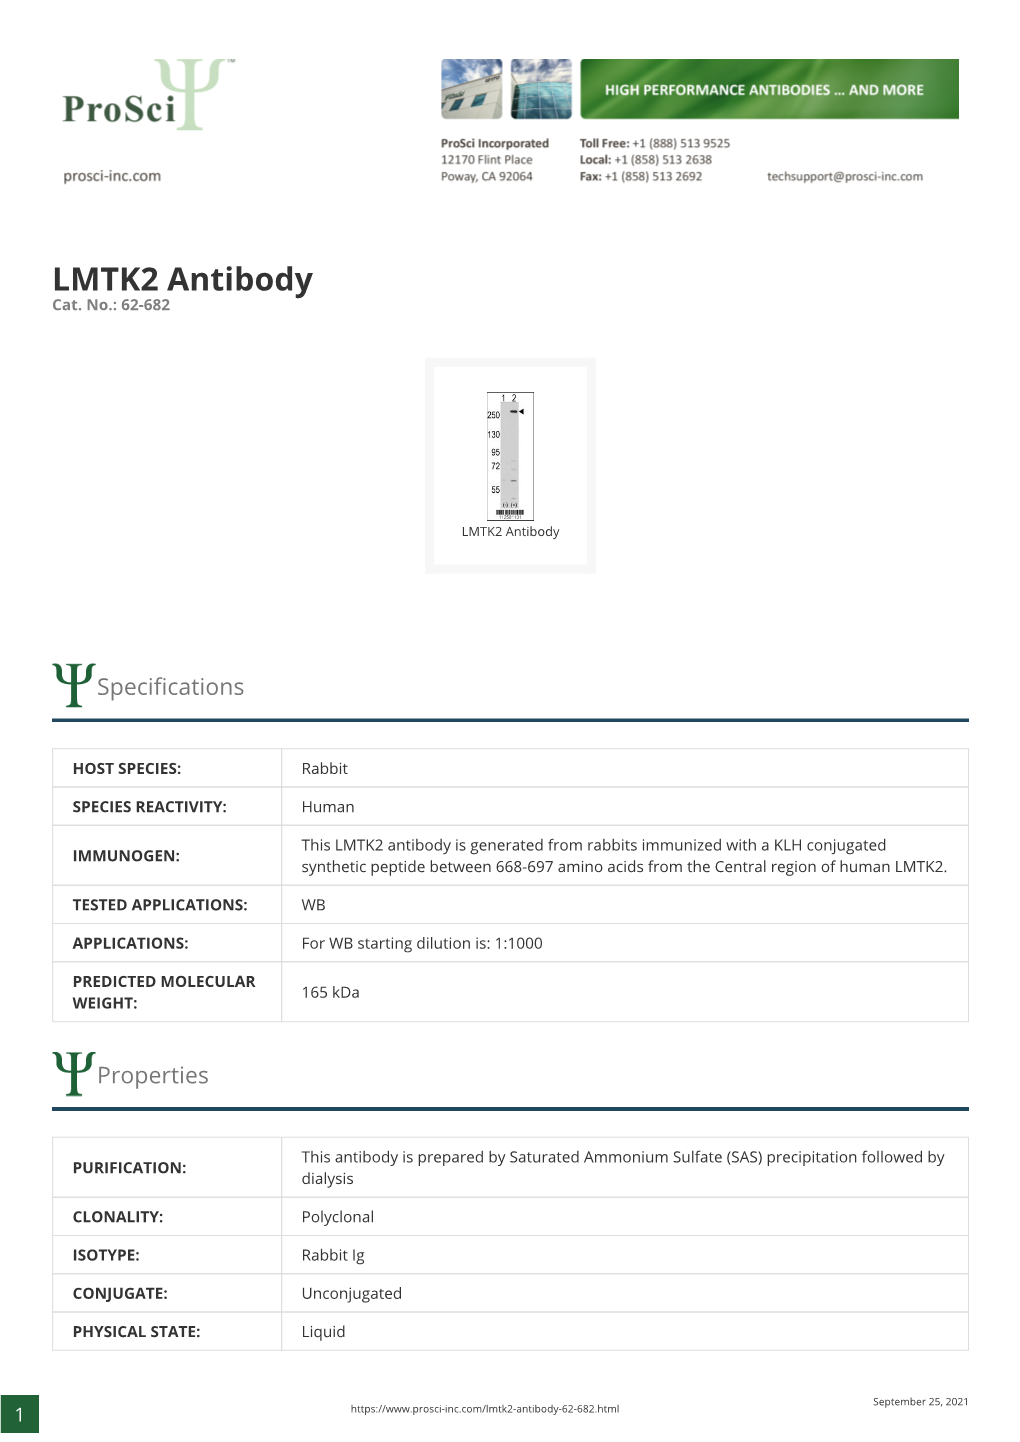 LMTK2 Antibody Cat